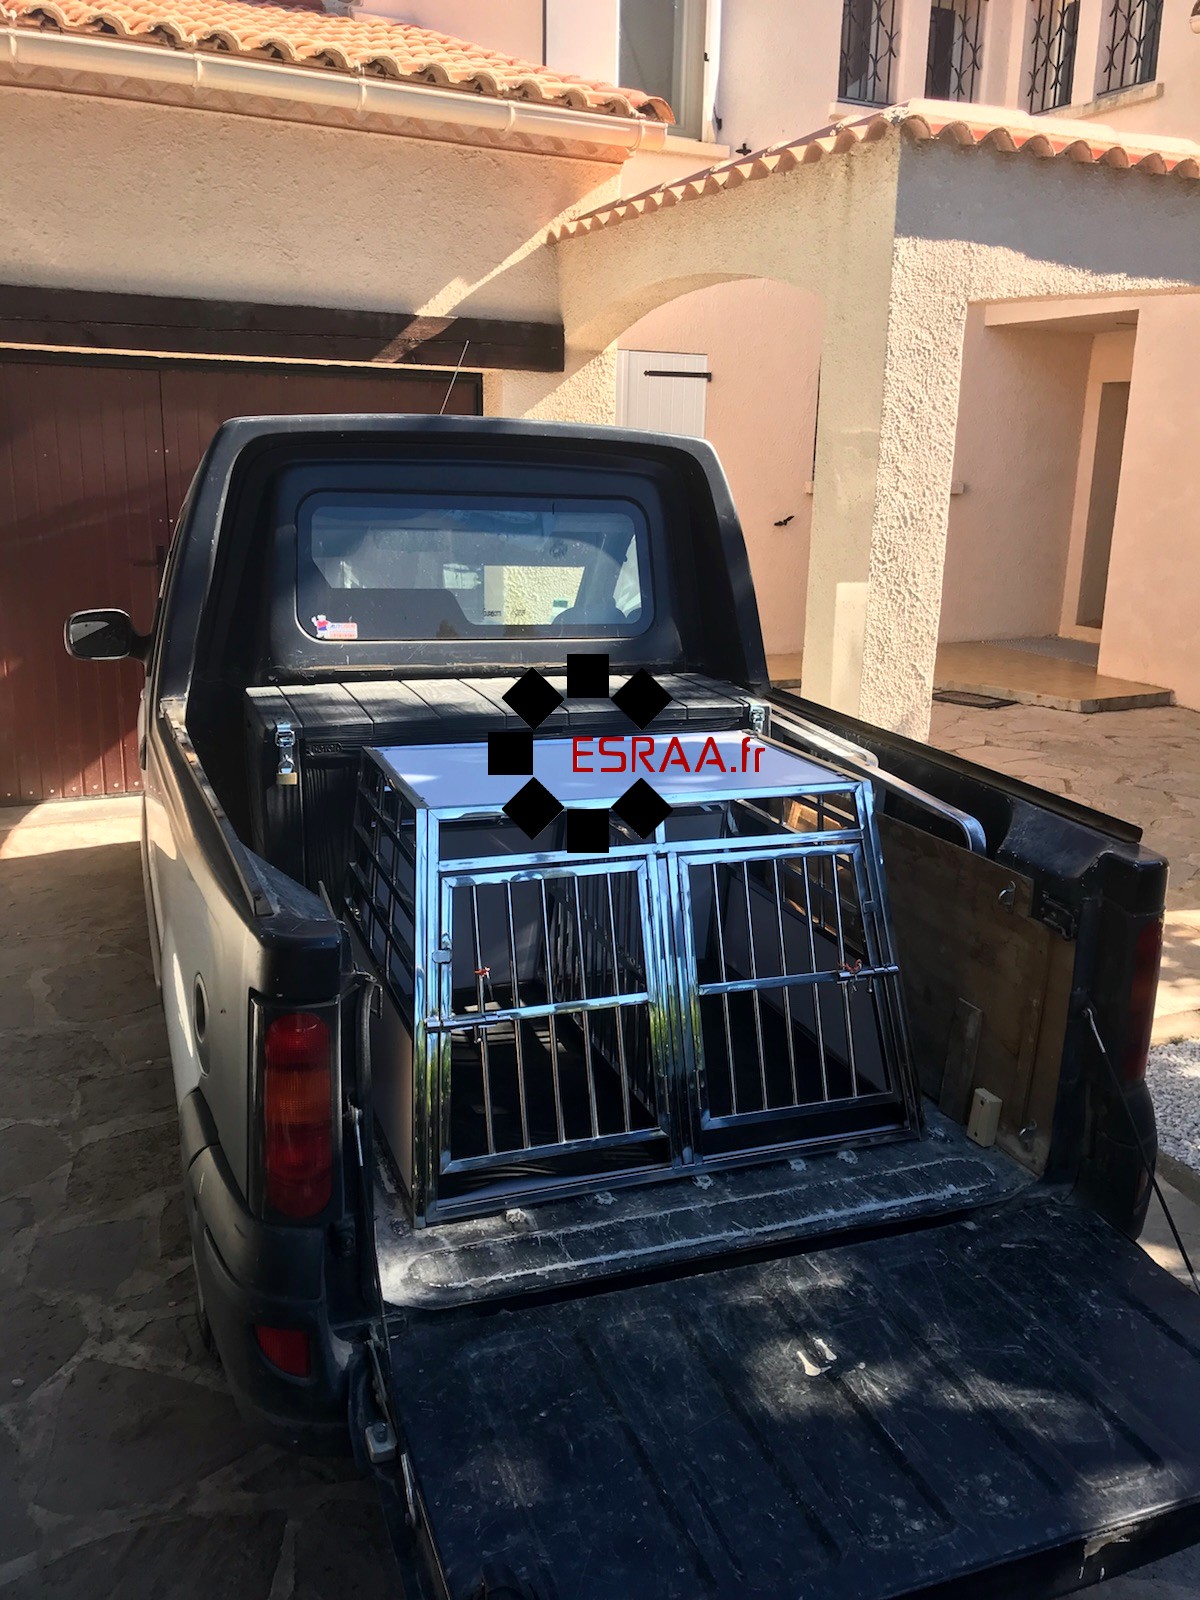 Cage chien voiture caisse transport voiture, pick up